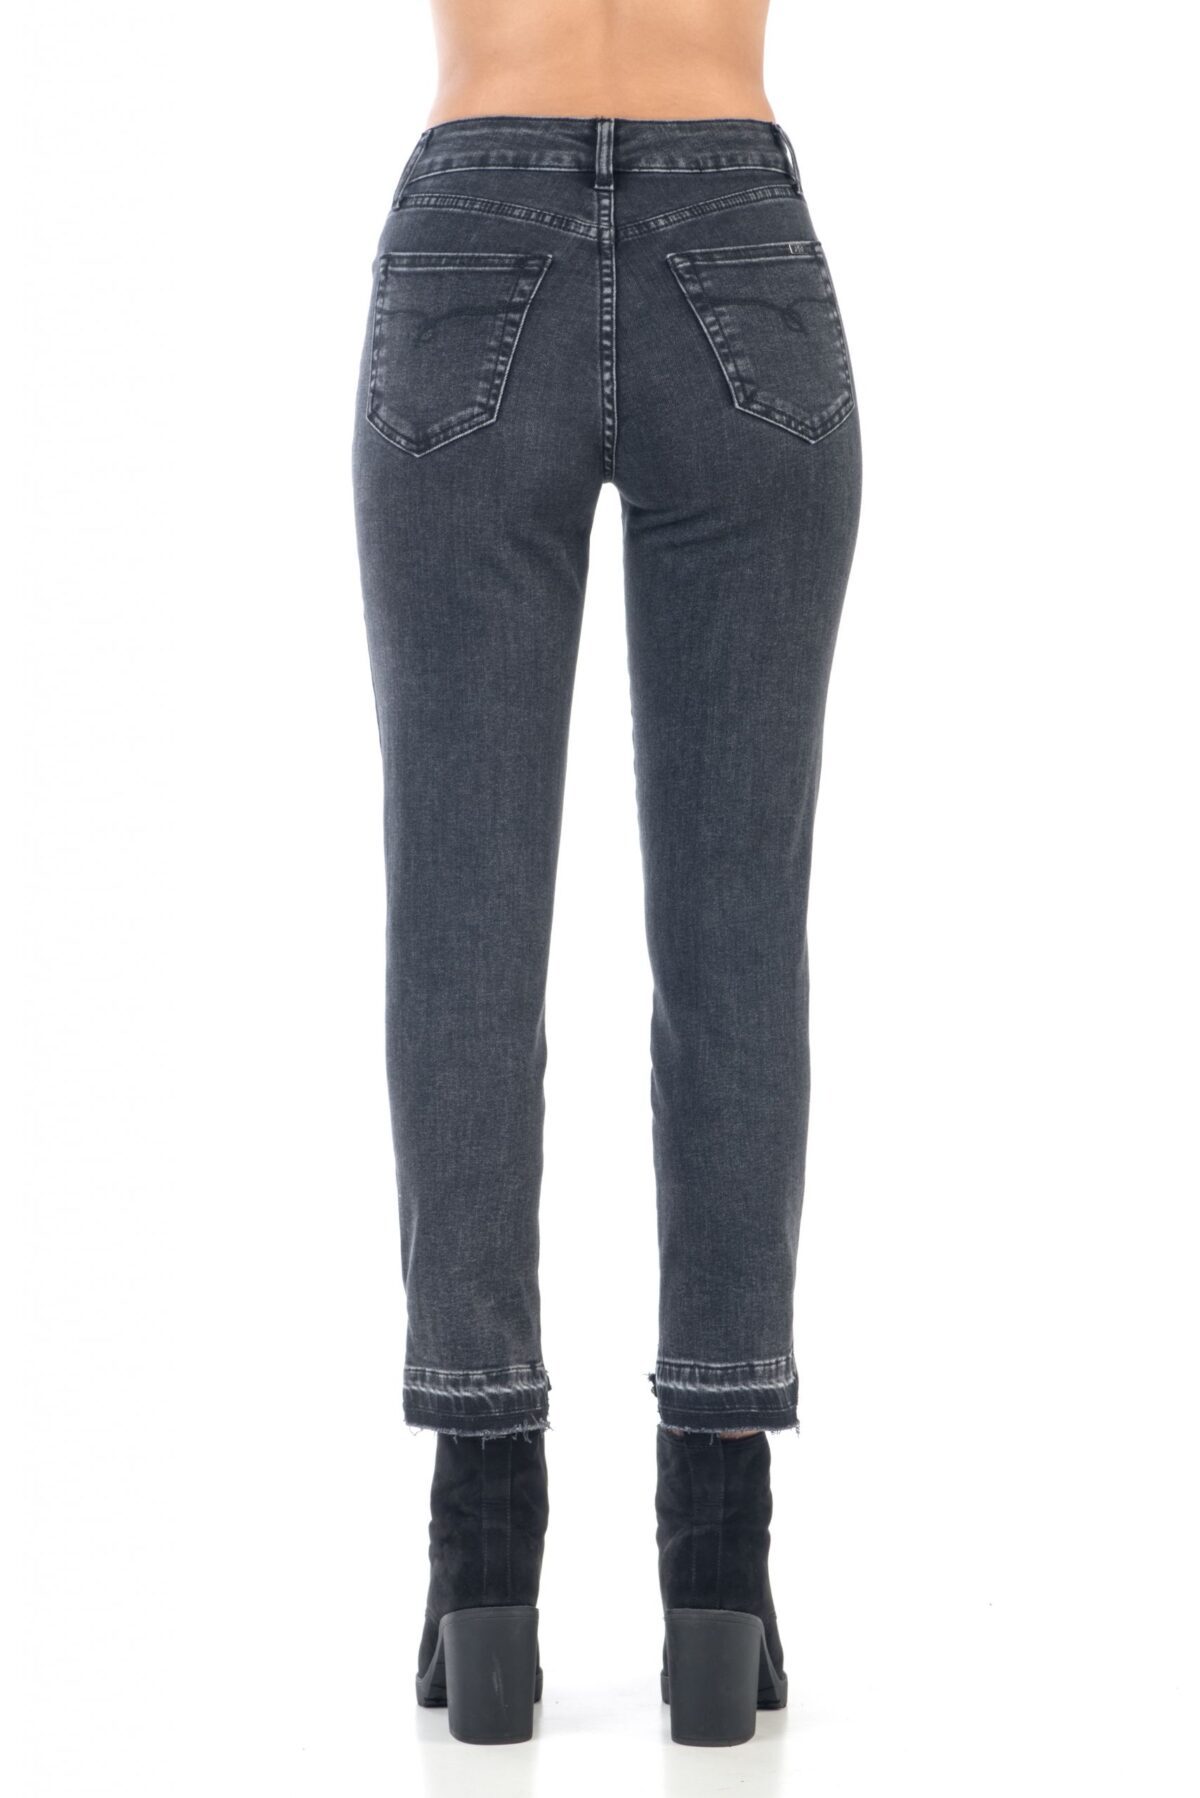 Jonny Q jeans P1490 Meryl x fit stretch Q4912 10011 1 scaled